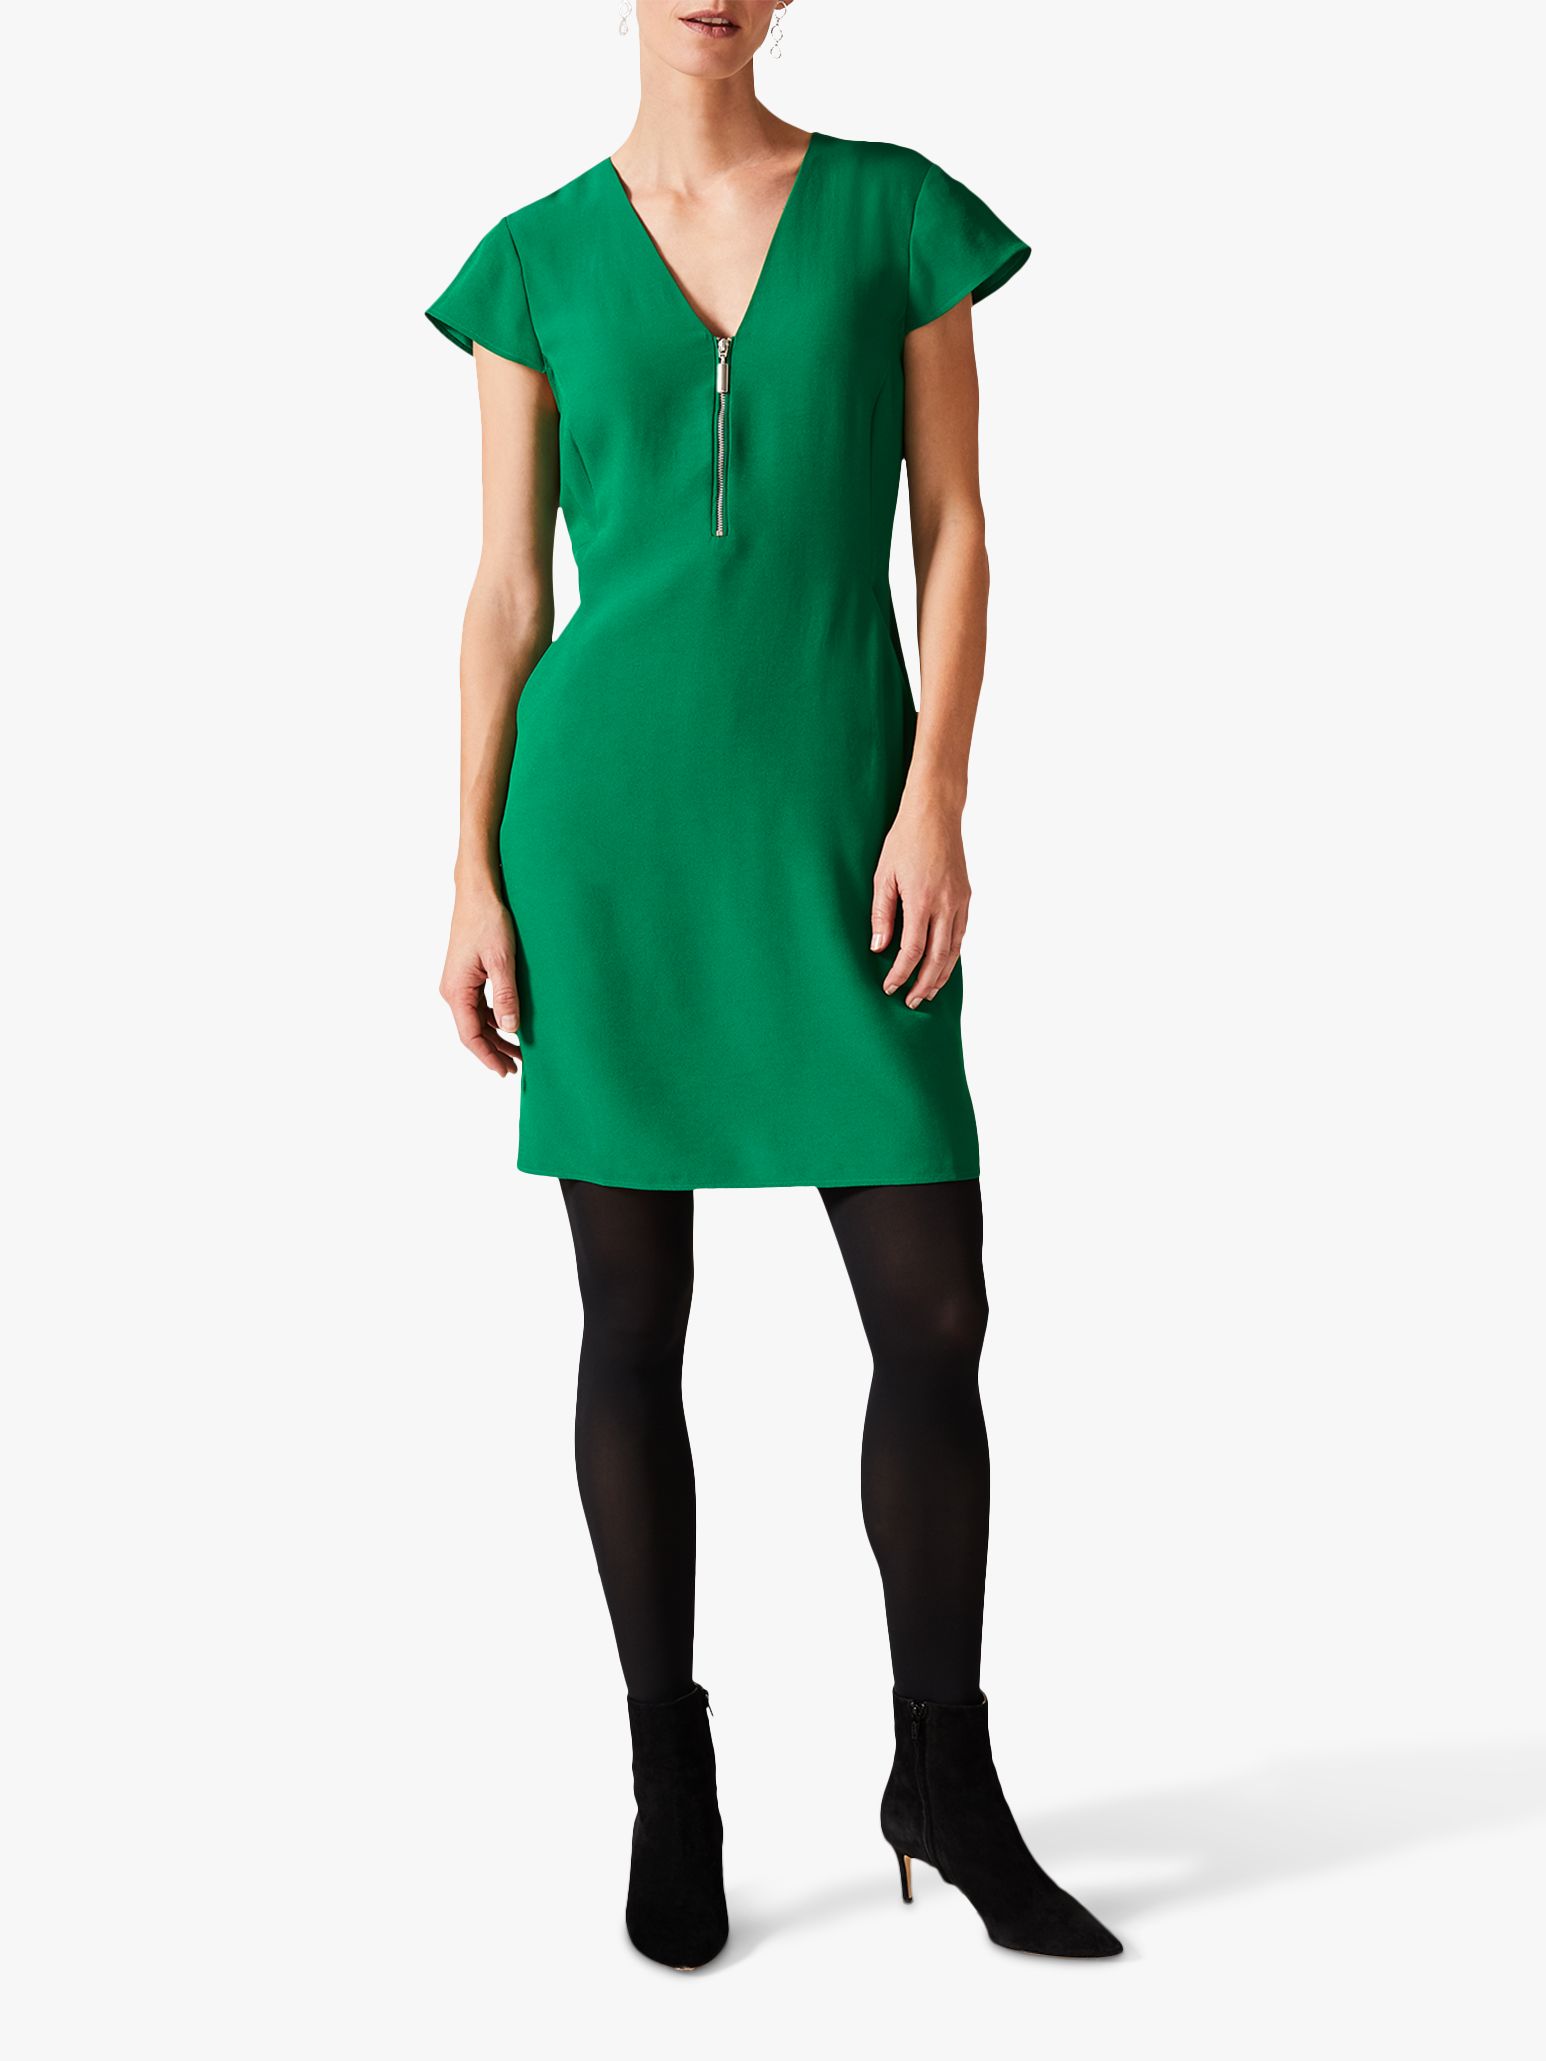 Phase Eight Victoria Zip Dress, Emerald Green